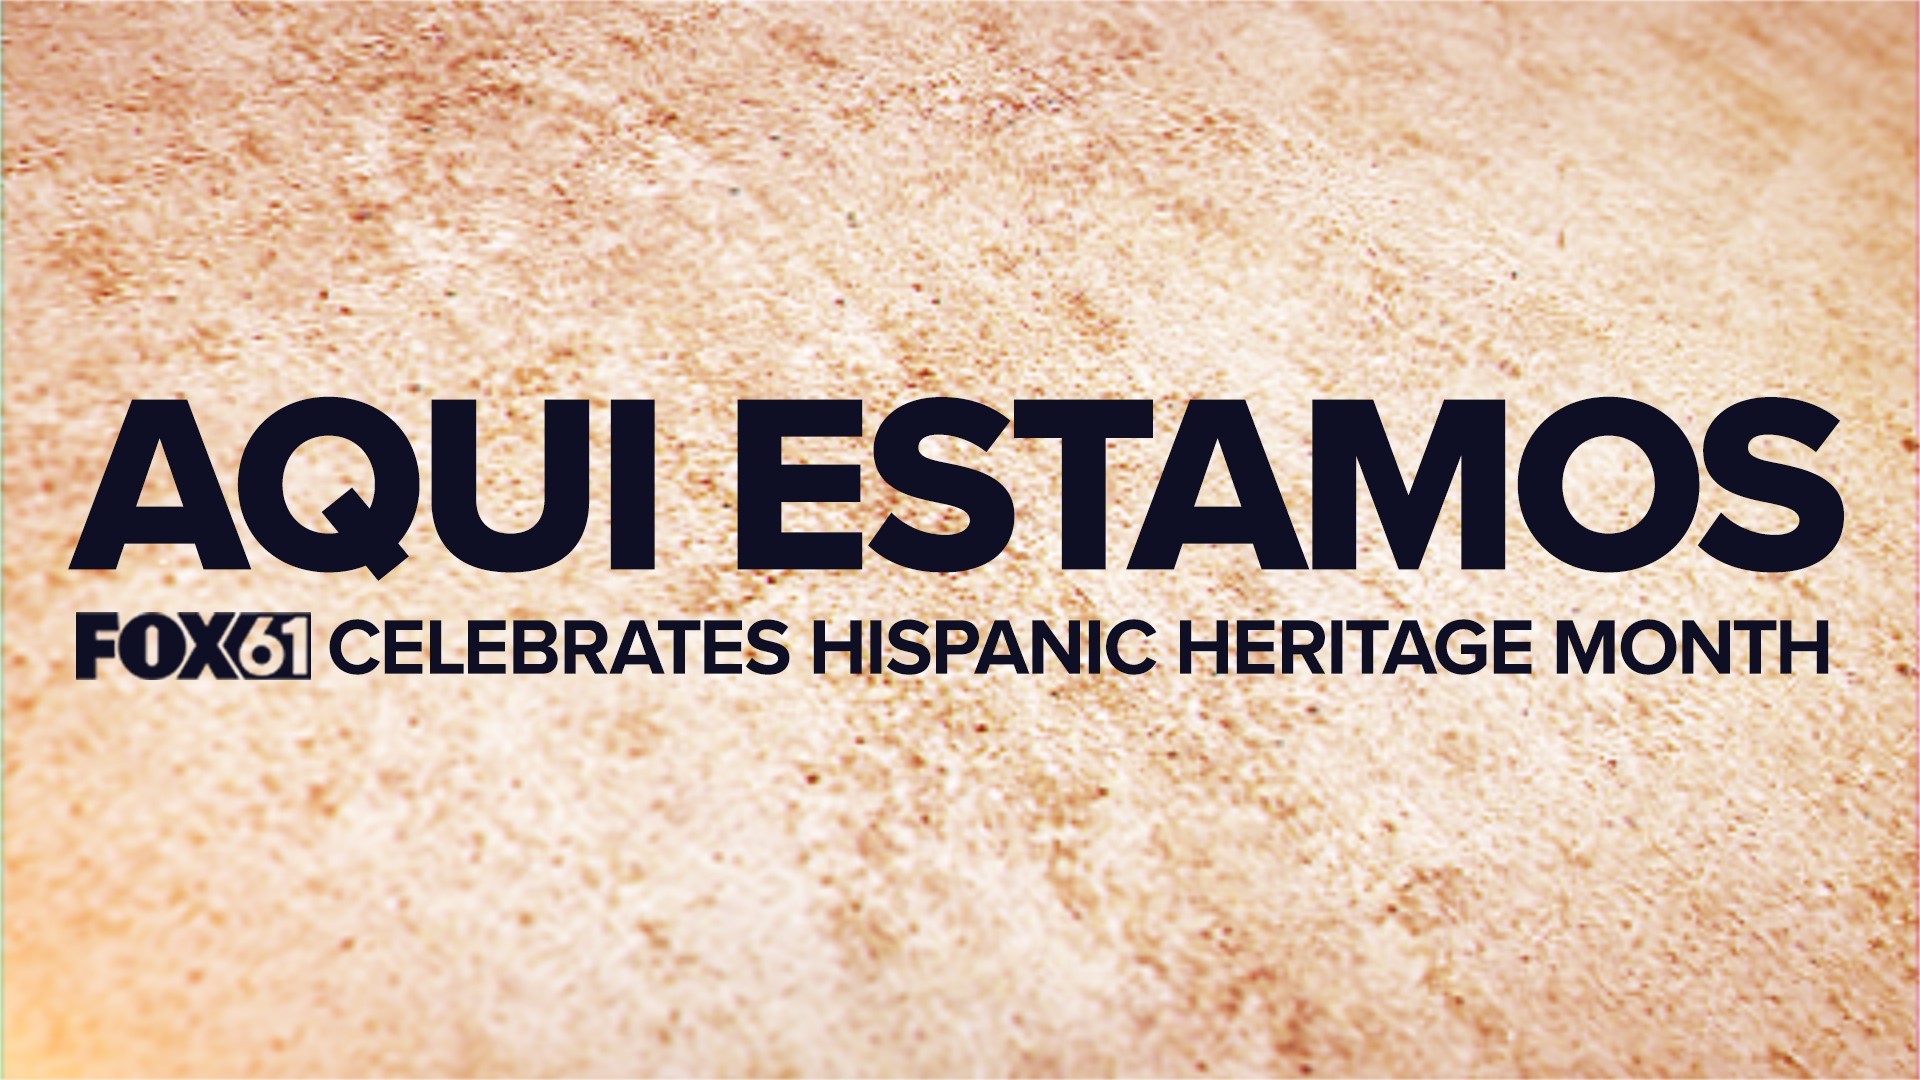 “Aqui Estamos: FOX61庆祝拉美裔传统月”旨在表彰拉美裔社区在康涅狄格州做出的贡献。